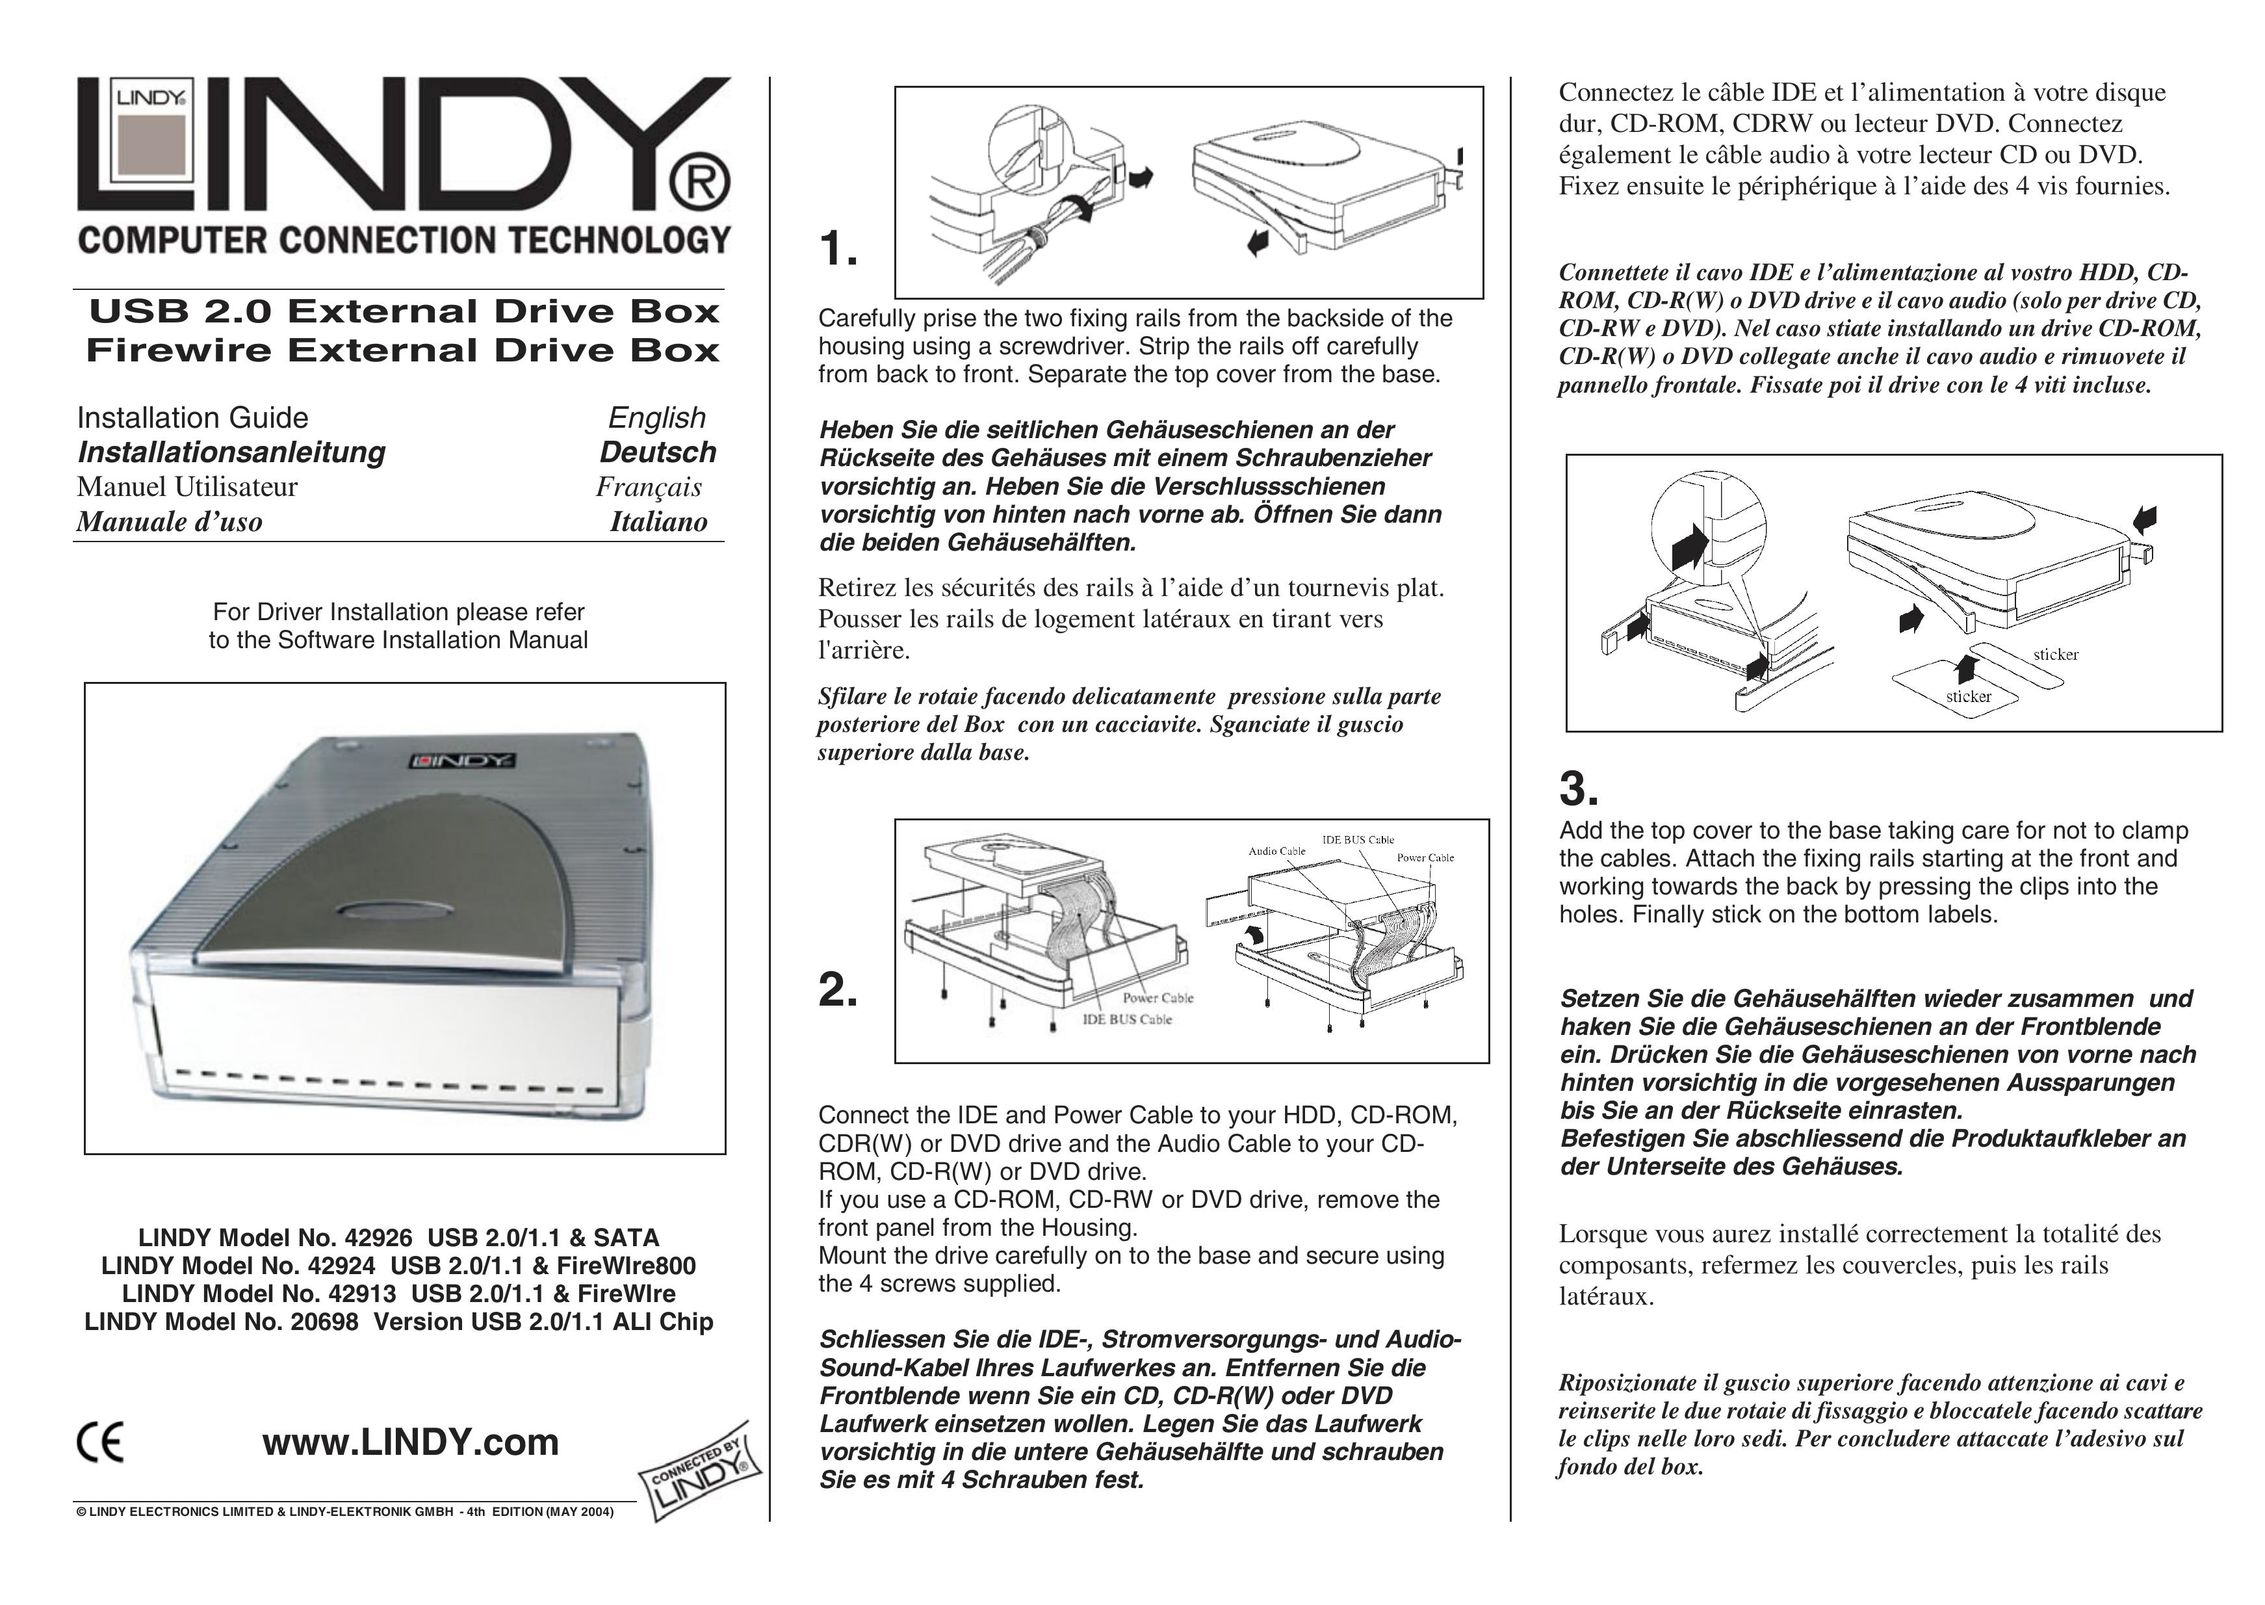 Lindy 42926 Computer Drive User Manual